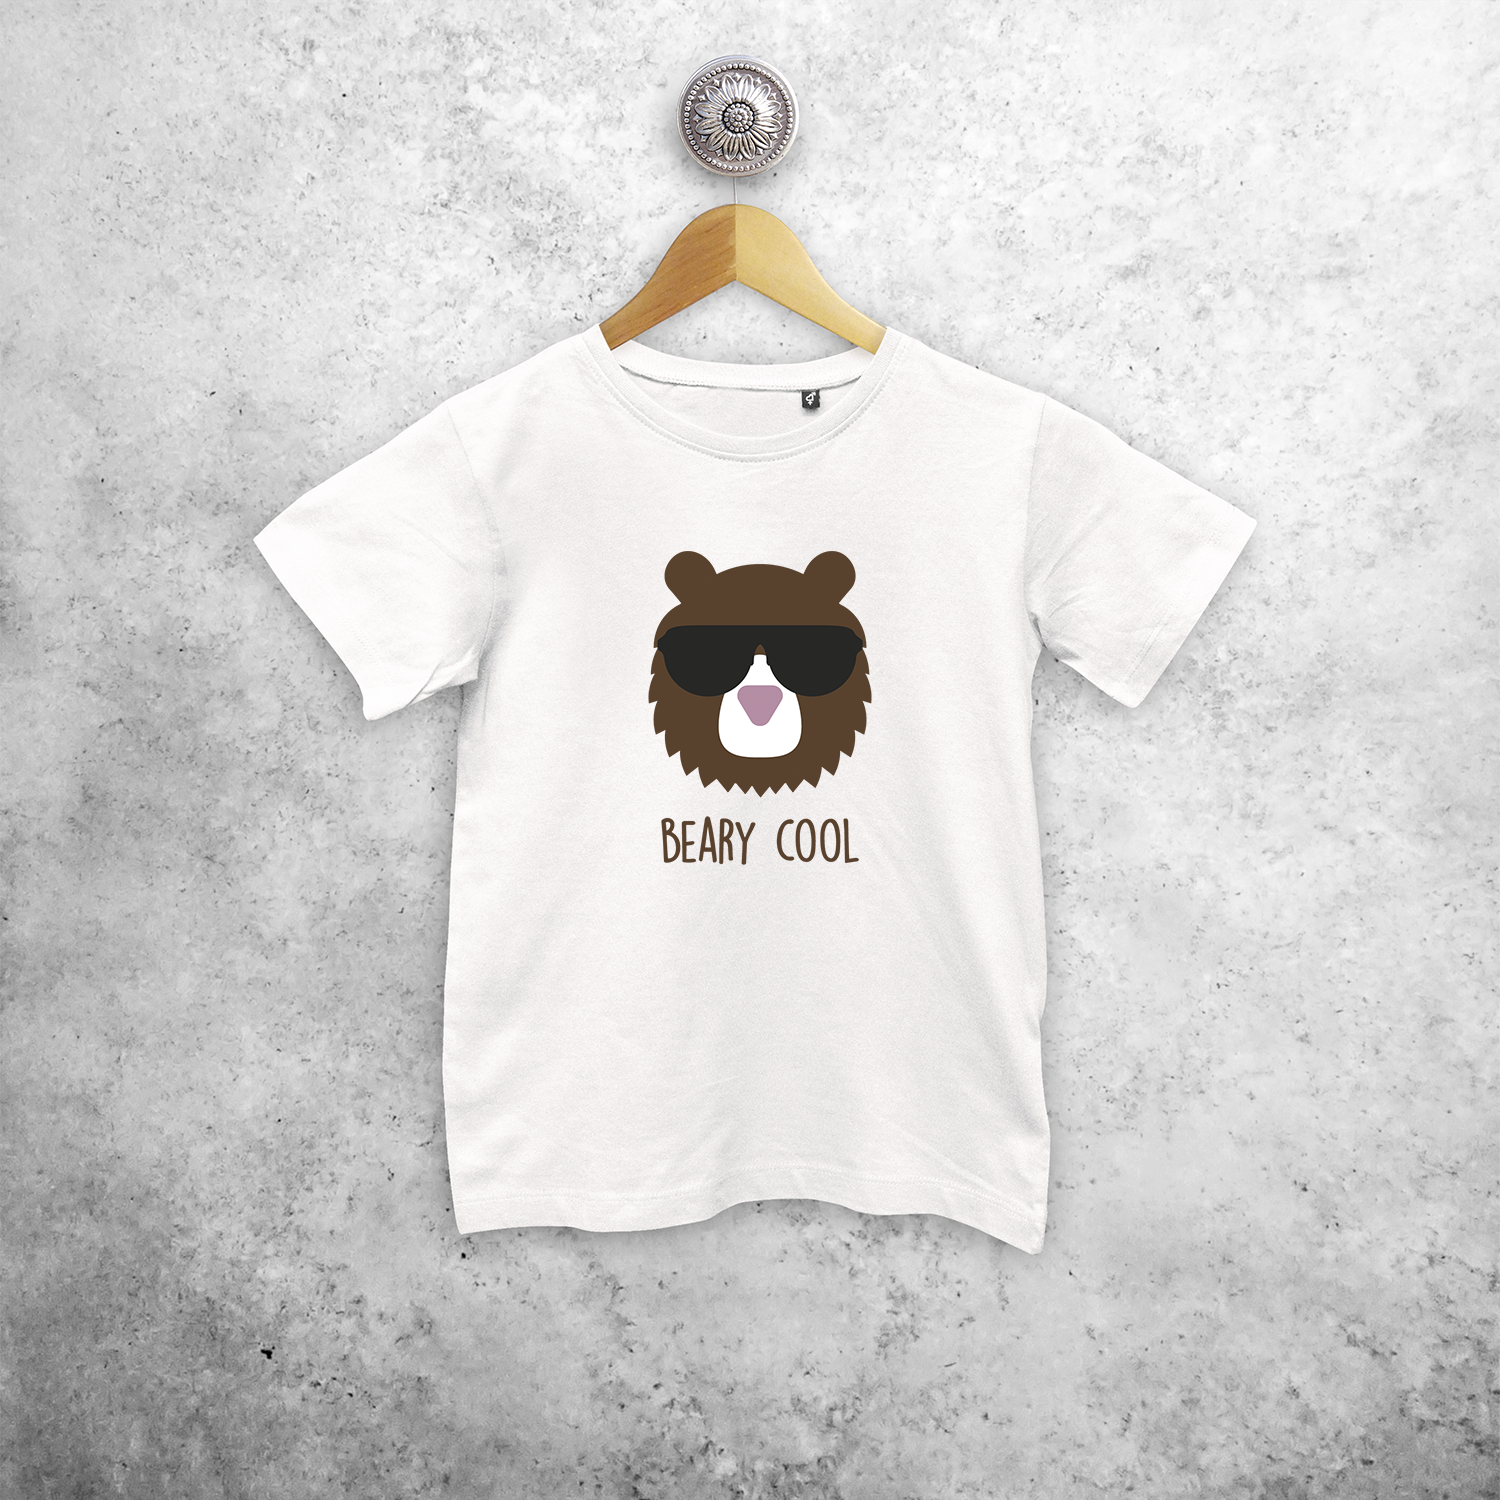 'Beary cool' kids shortsleeve shirt